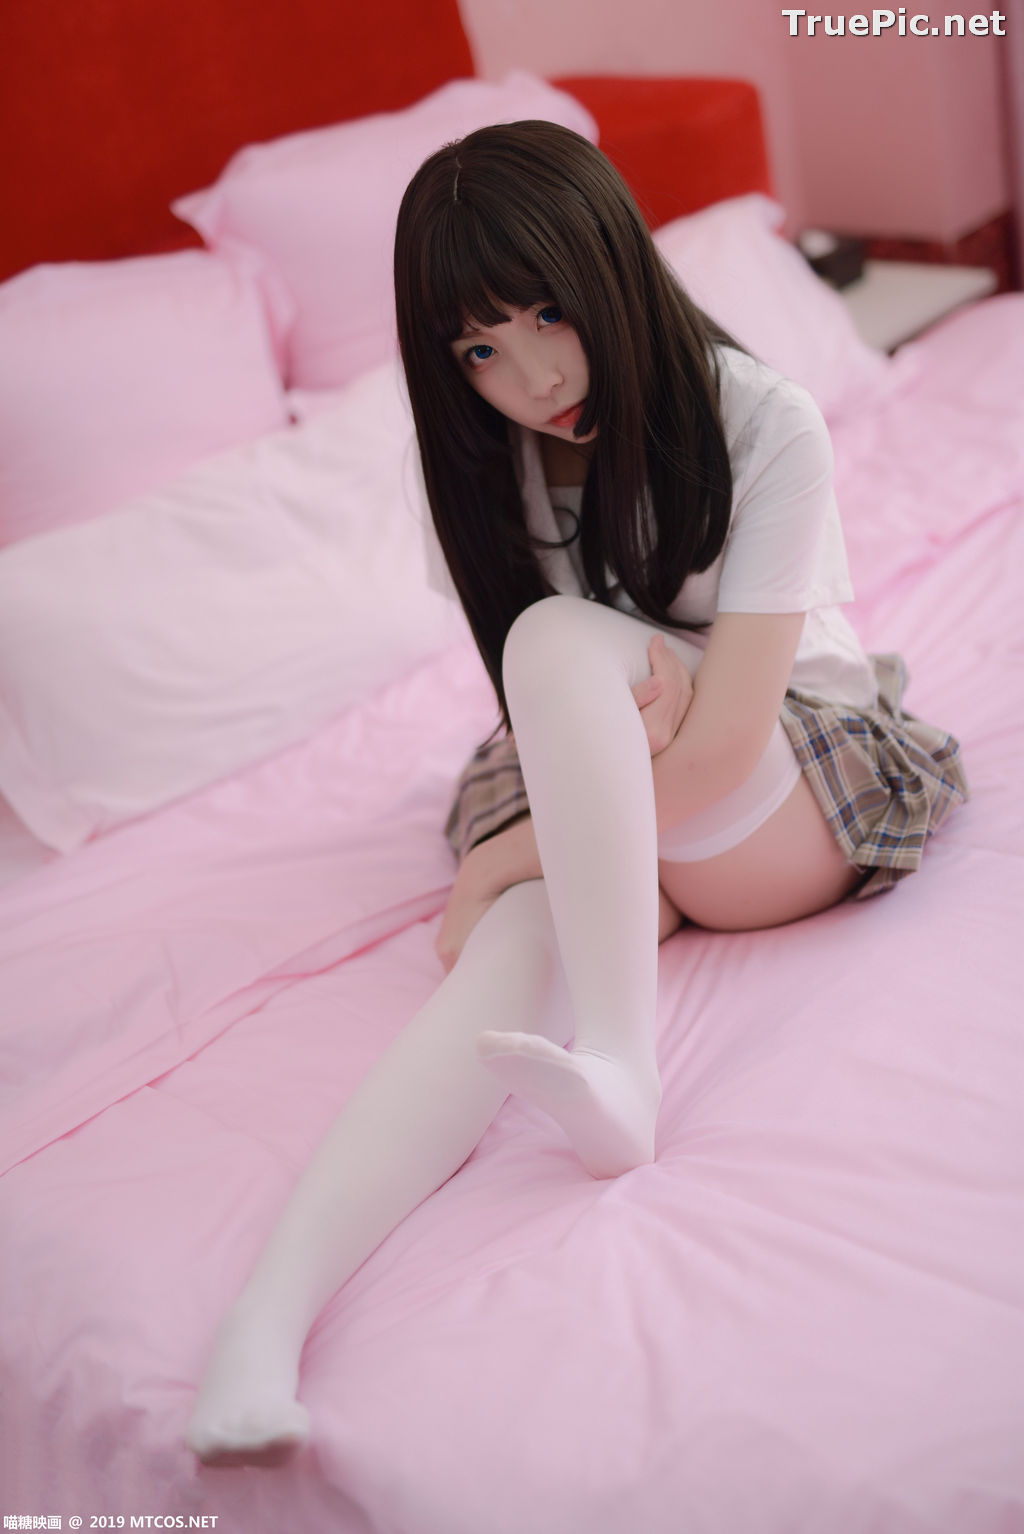 Image [MTCos] 喵糖映画 Vol.034 – Chinese Cute Model - Schoolgirl Uniform - TruePic.net - Picture-20